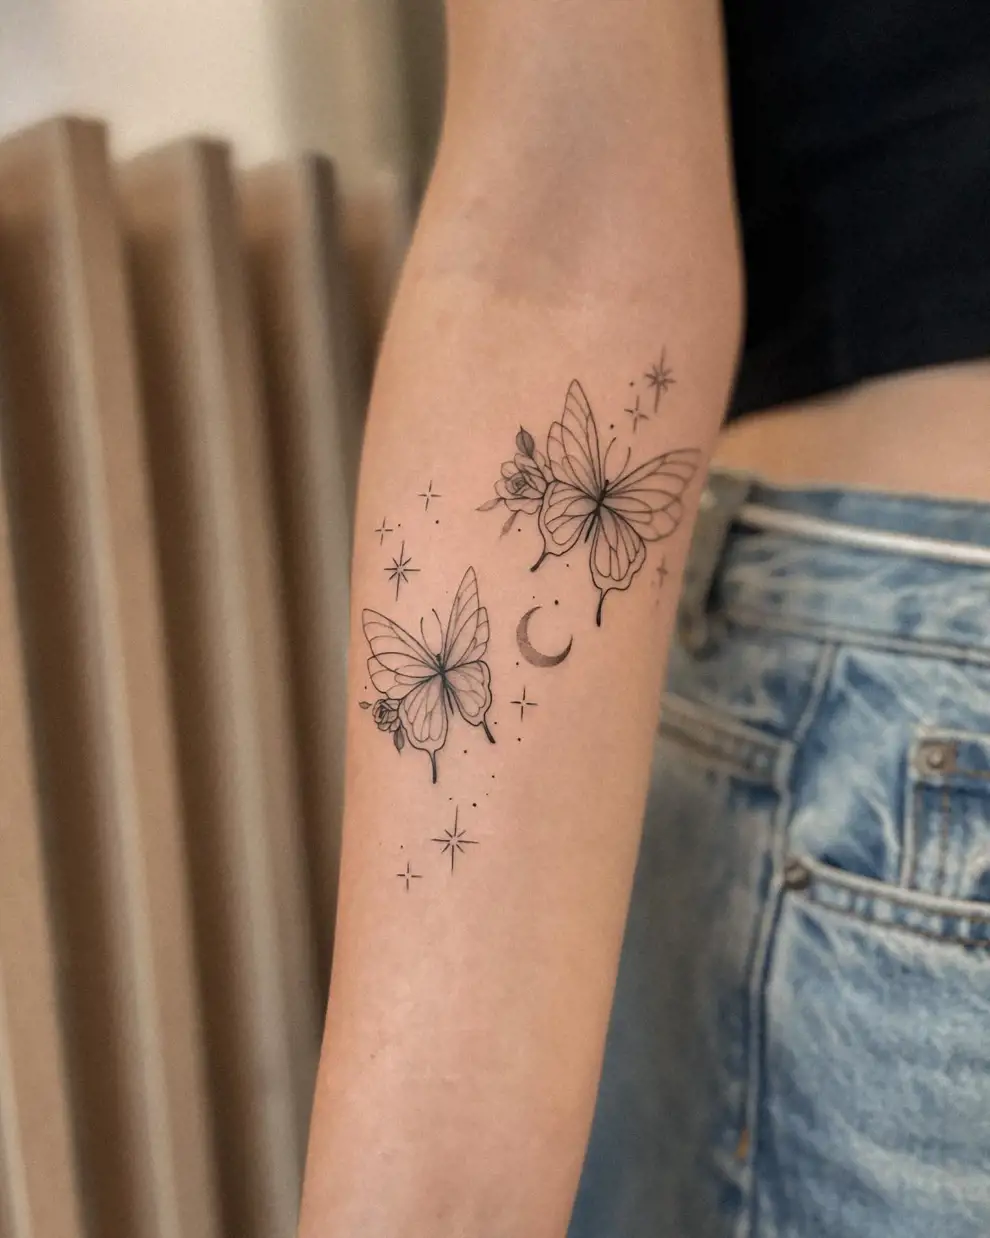 Tatuaje mariposa y estrellas